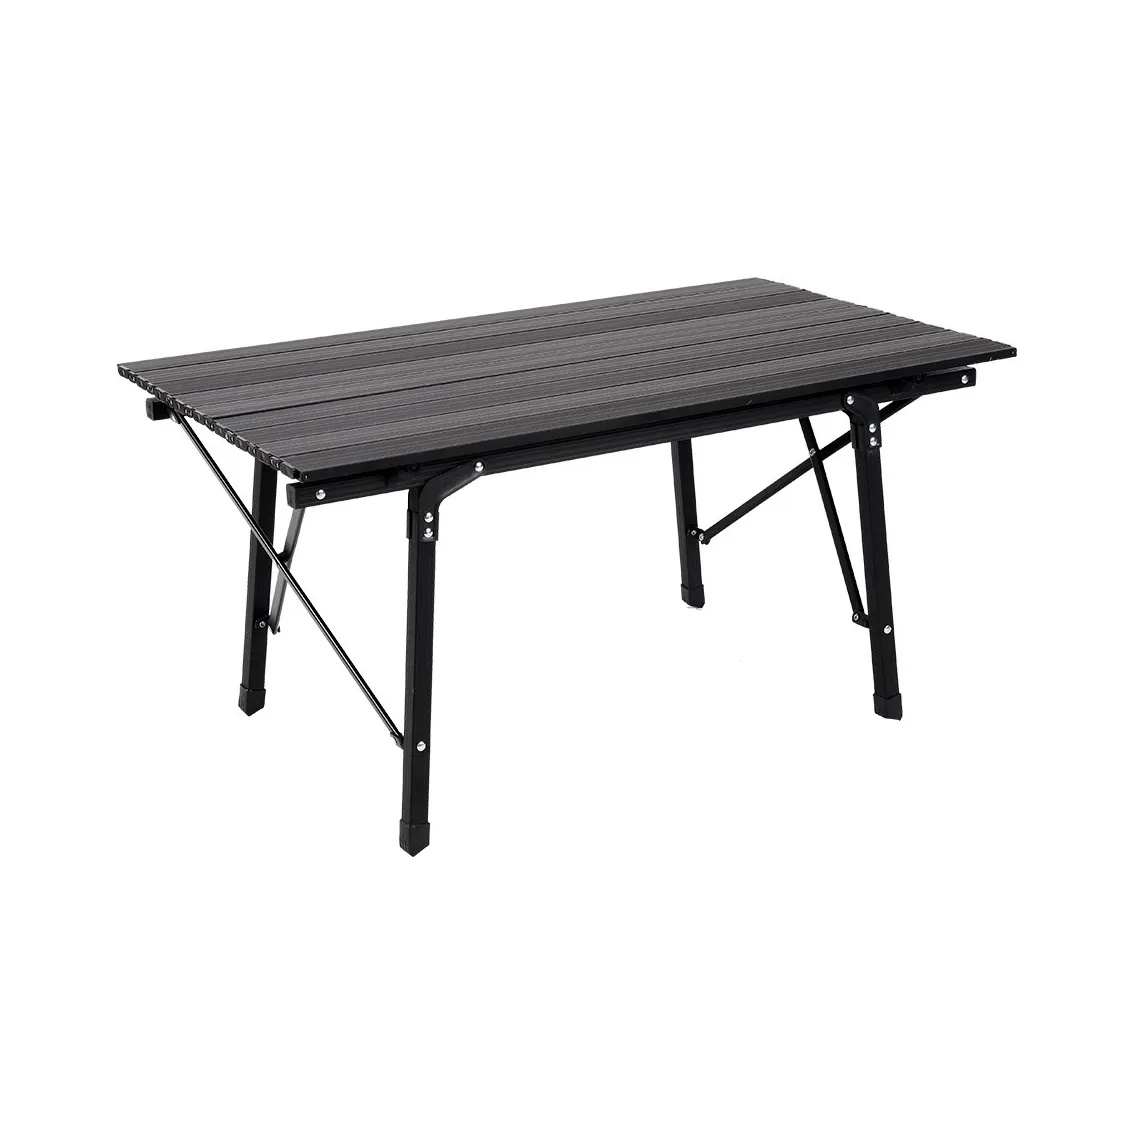 Kingmax outdoor aluminum adjustable height folding camping table